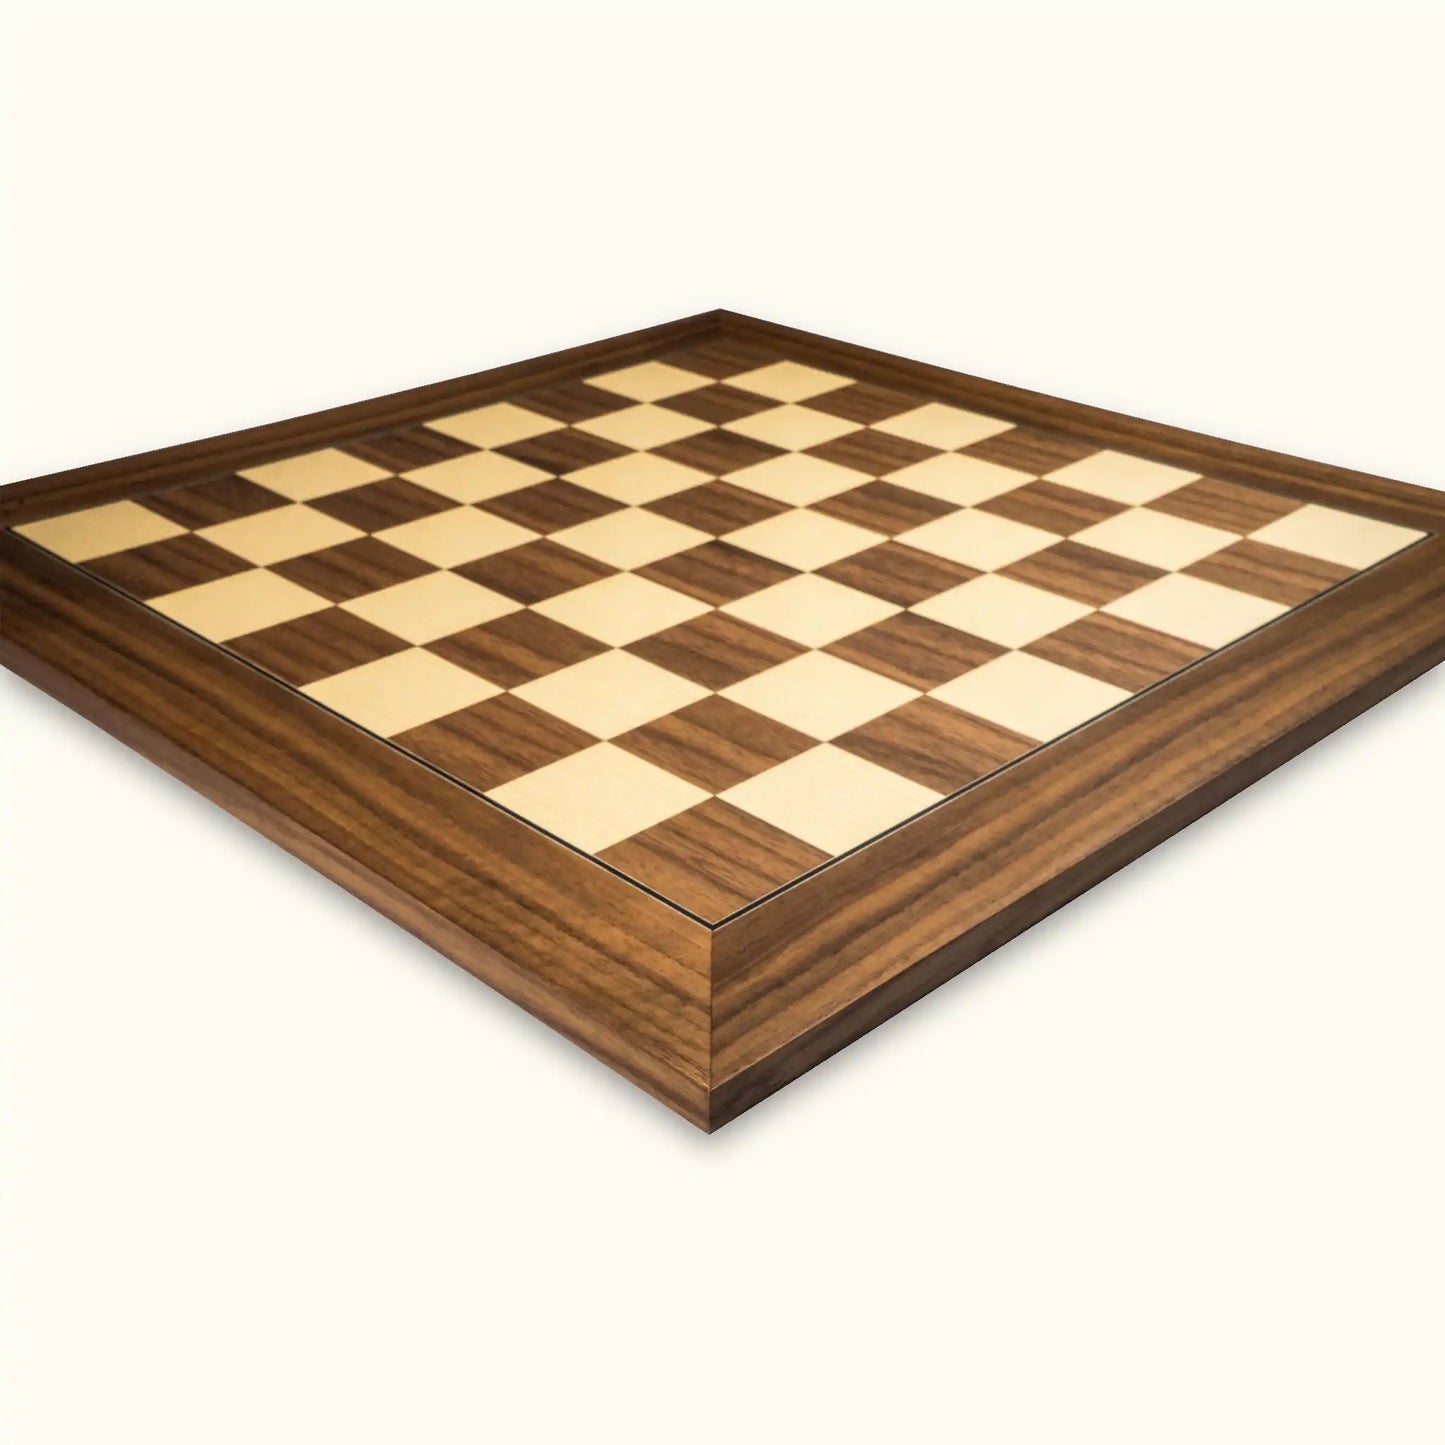 Chessboard walnut deluxe 55 mm diagonal view